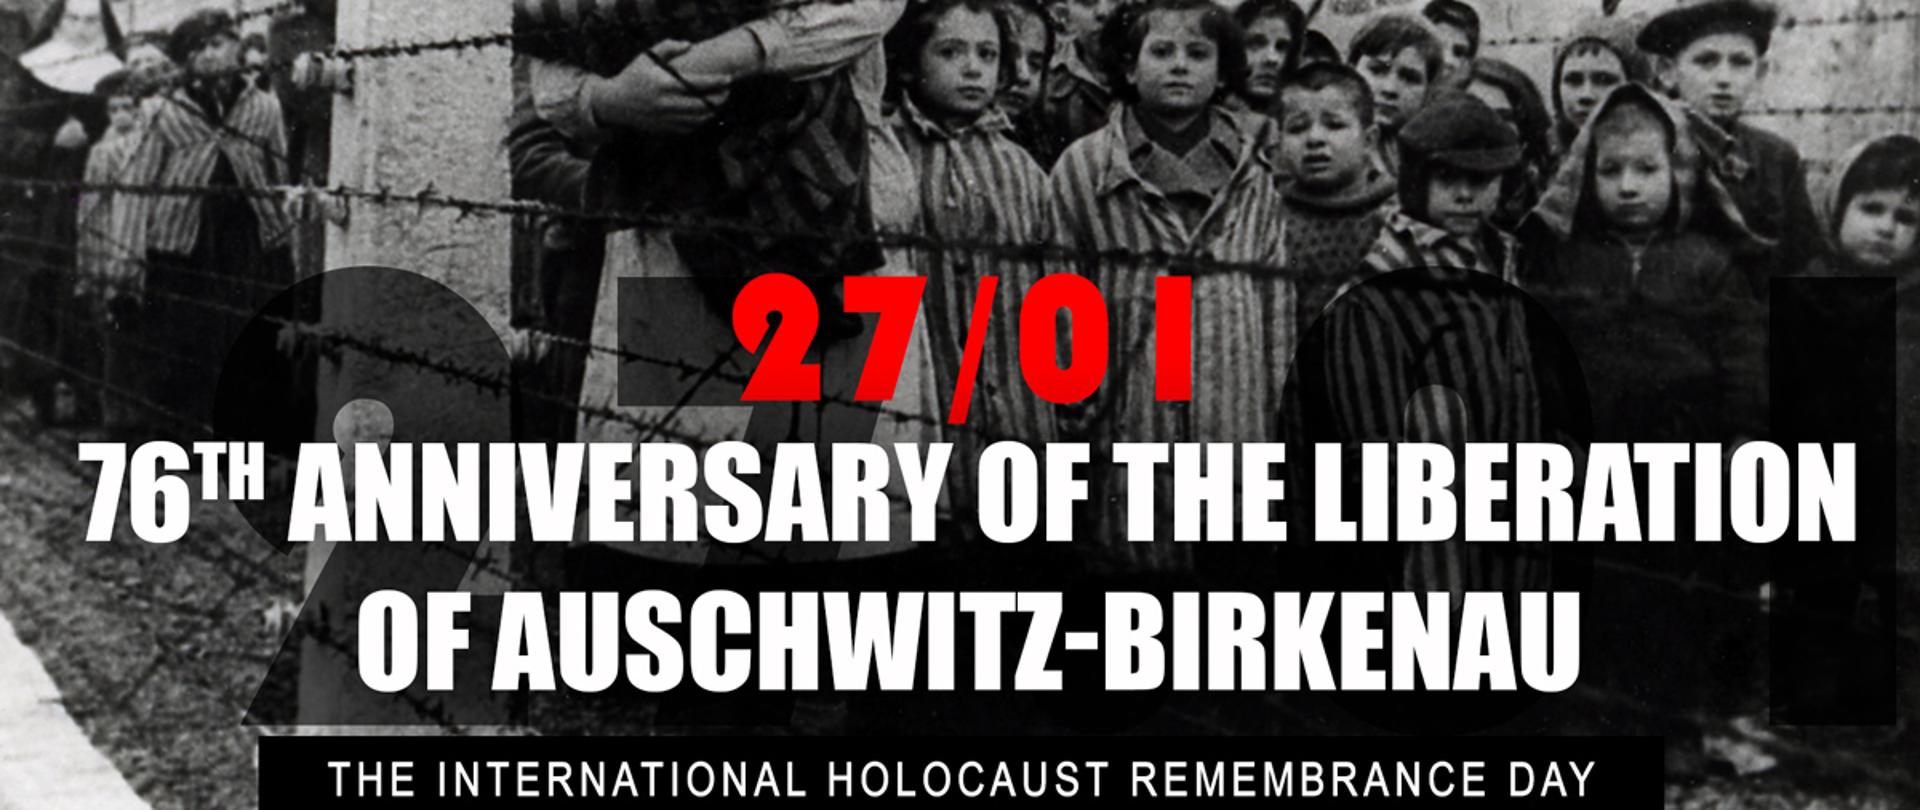 76th anniversary of the liberation of Auschwitz - Birkenau